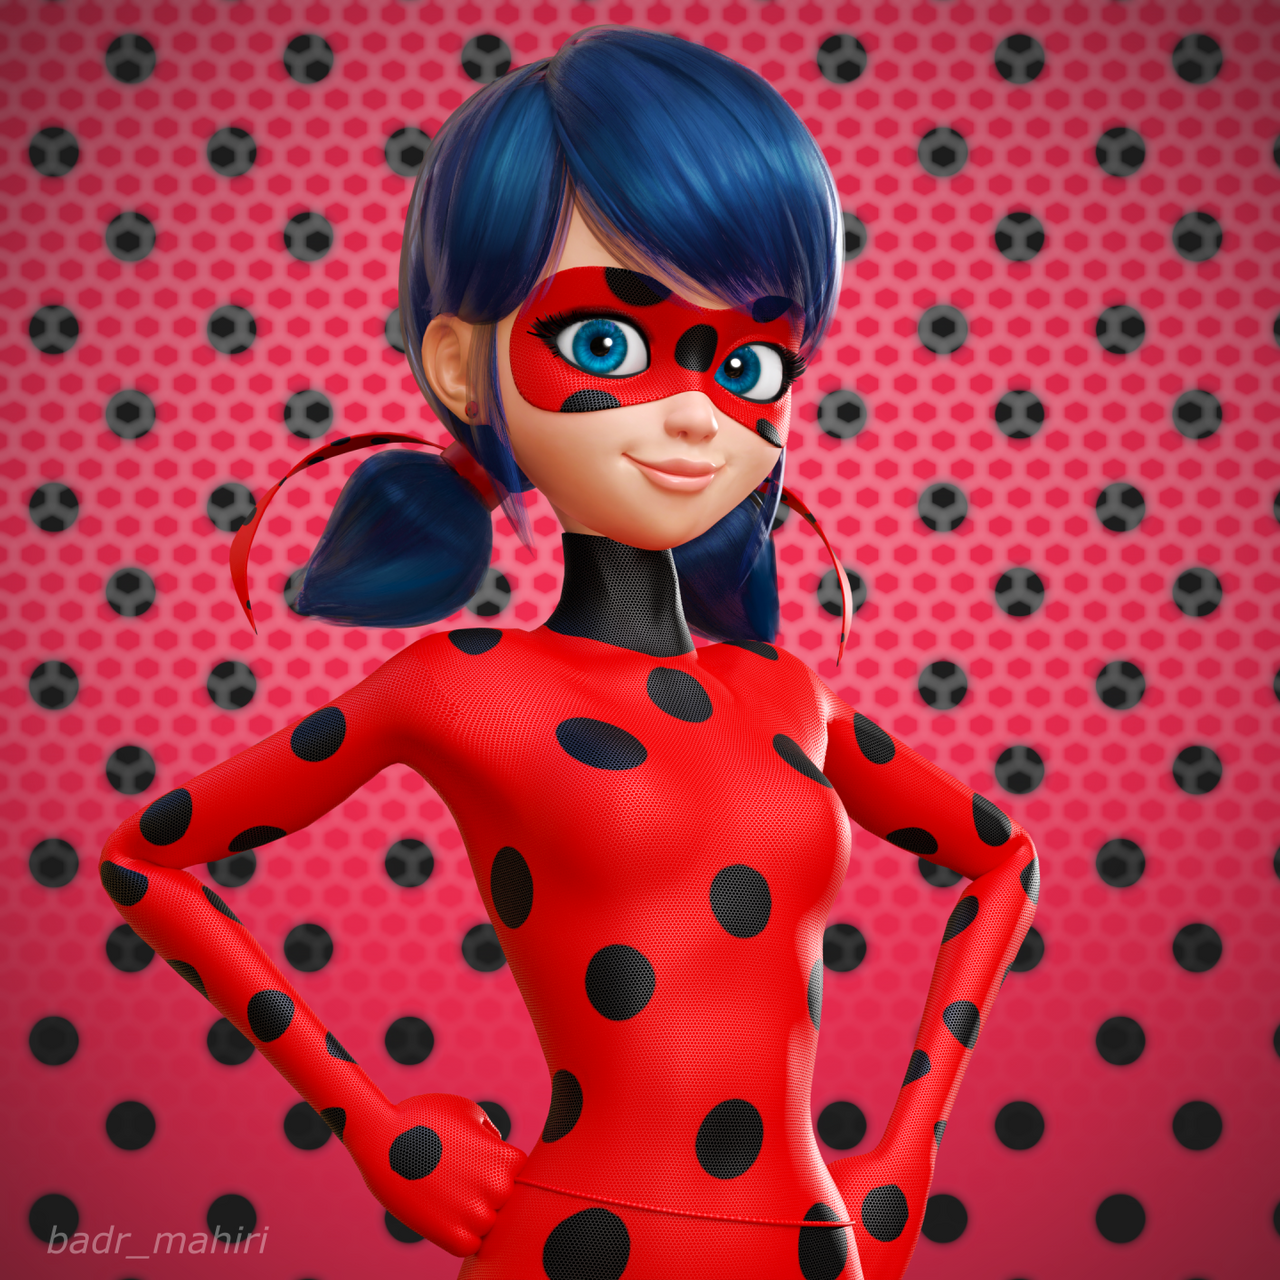 Ladybug by MiraculousRender on DeviantArt